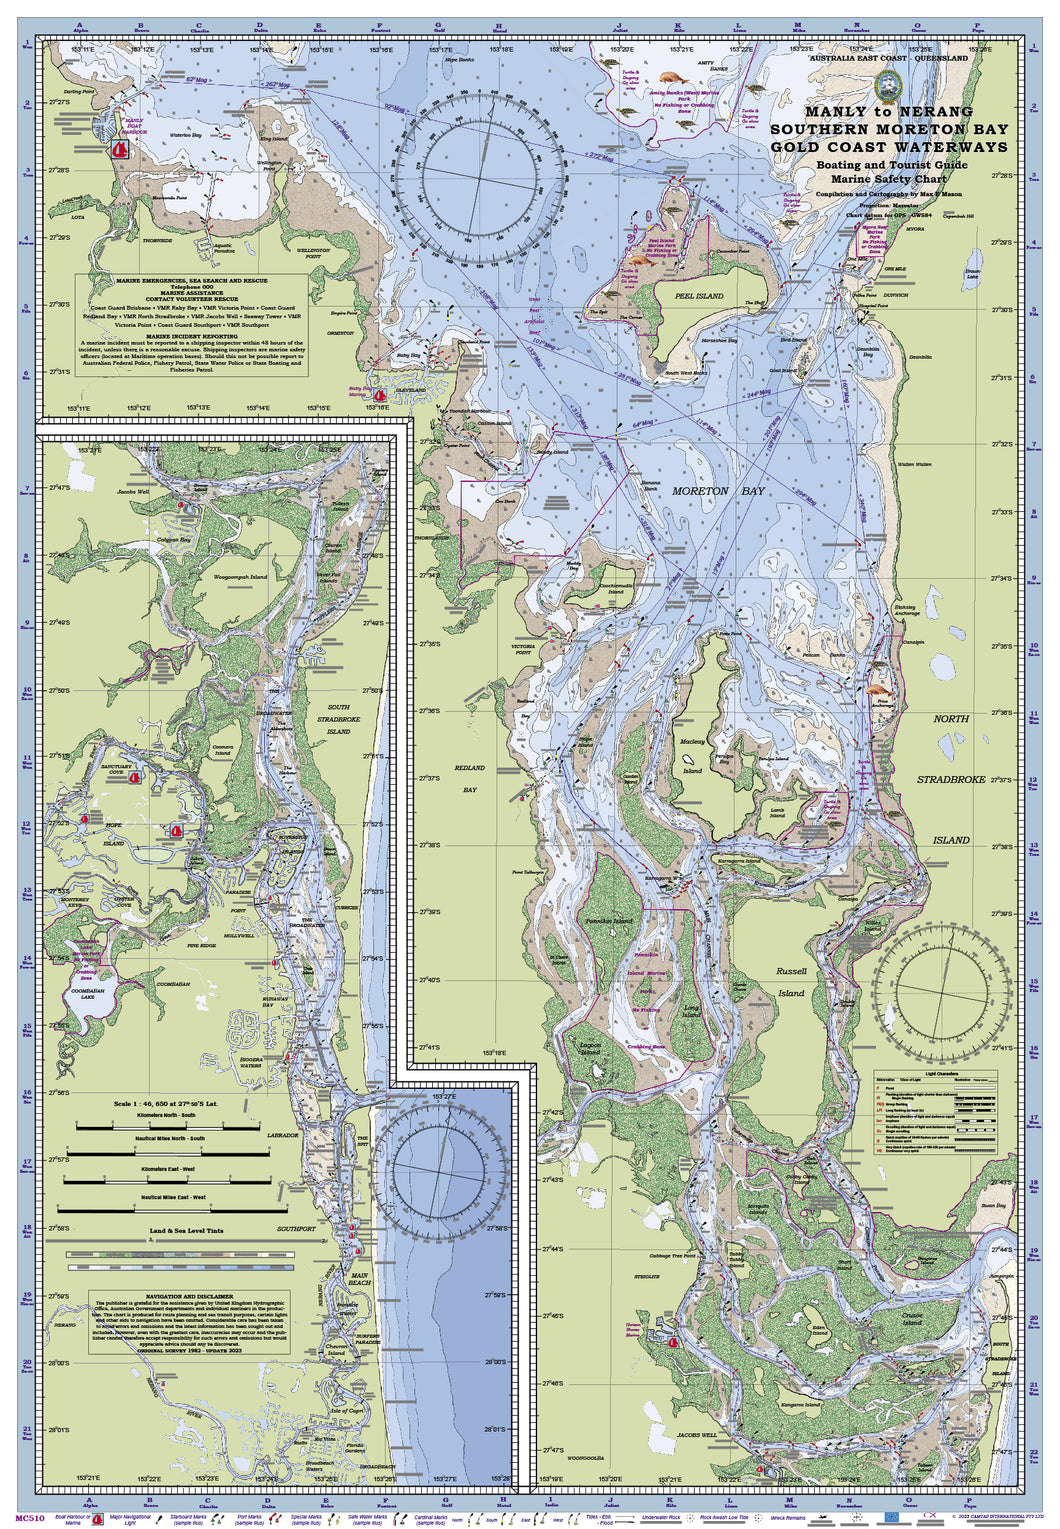 QLD Boating, Fishing, Camtas Marine Safety Chart - MANLY to NERANG, Moreton Bay, Gold Coast Waterways / MC510